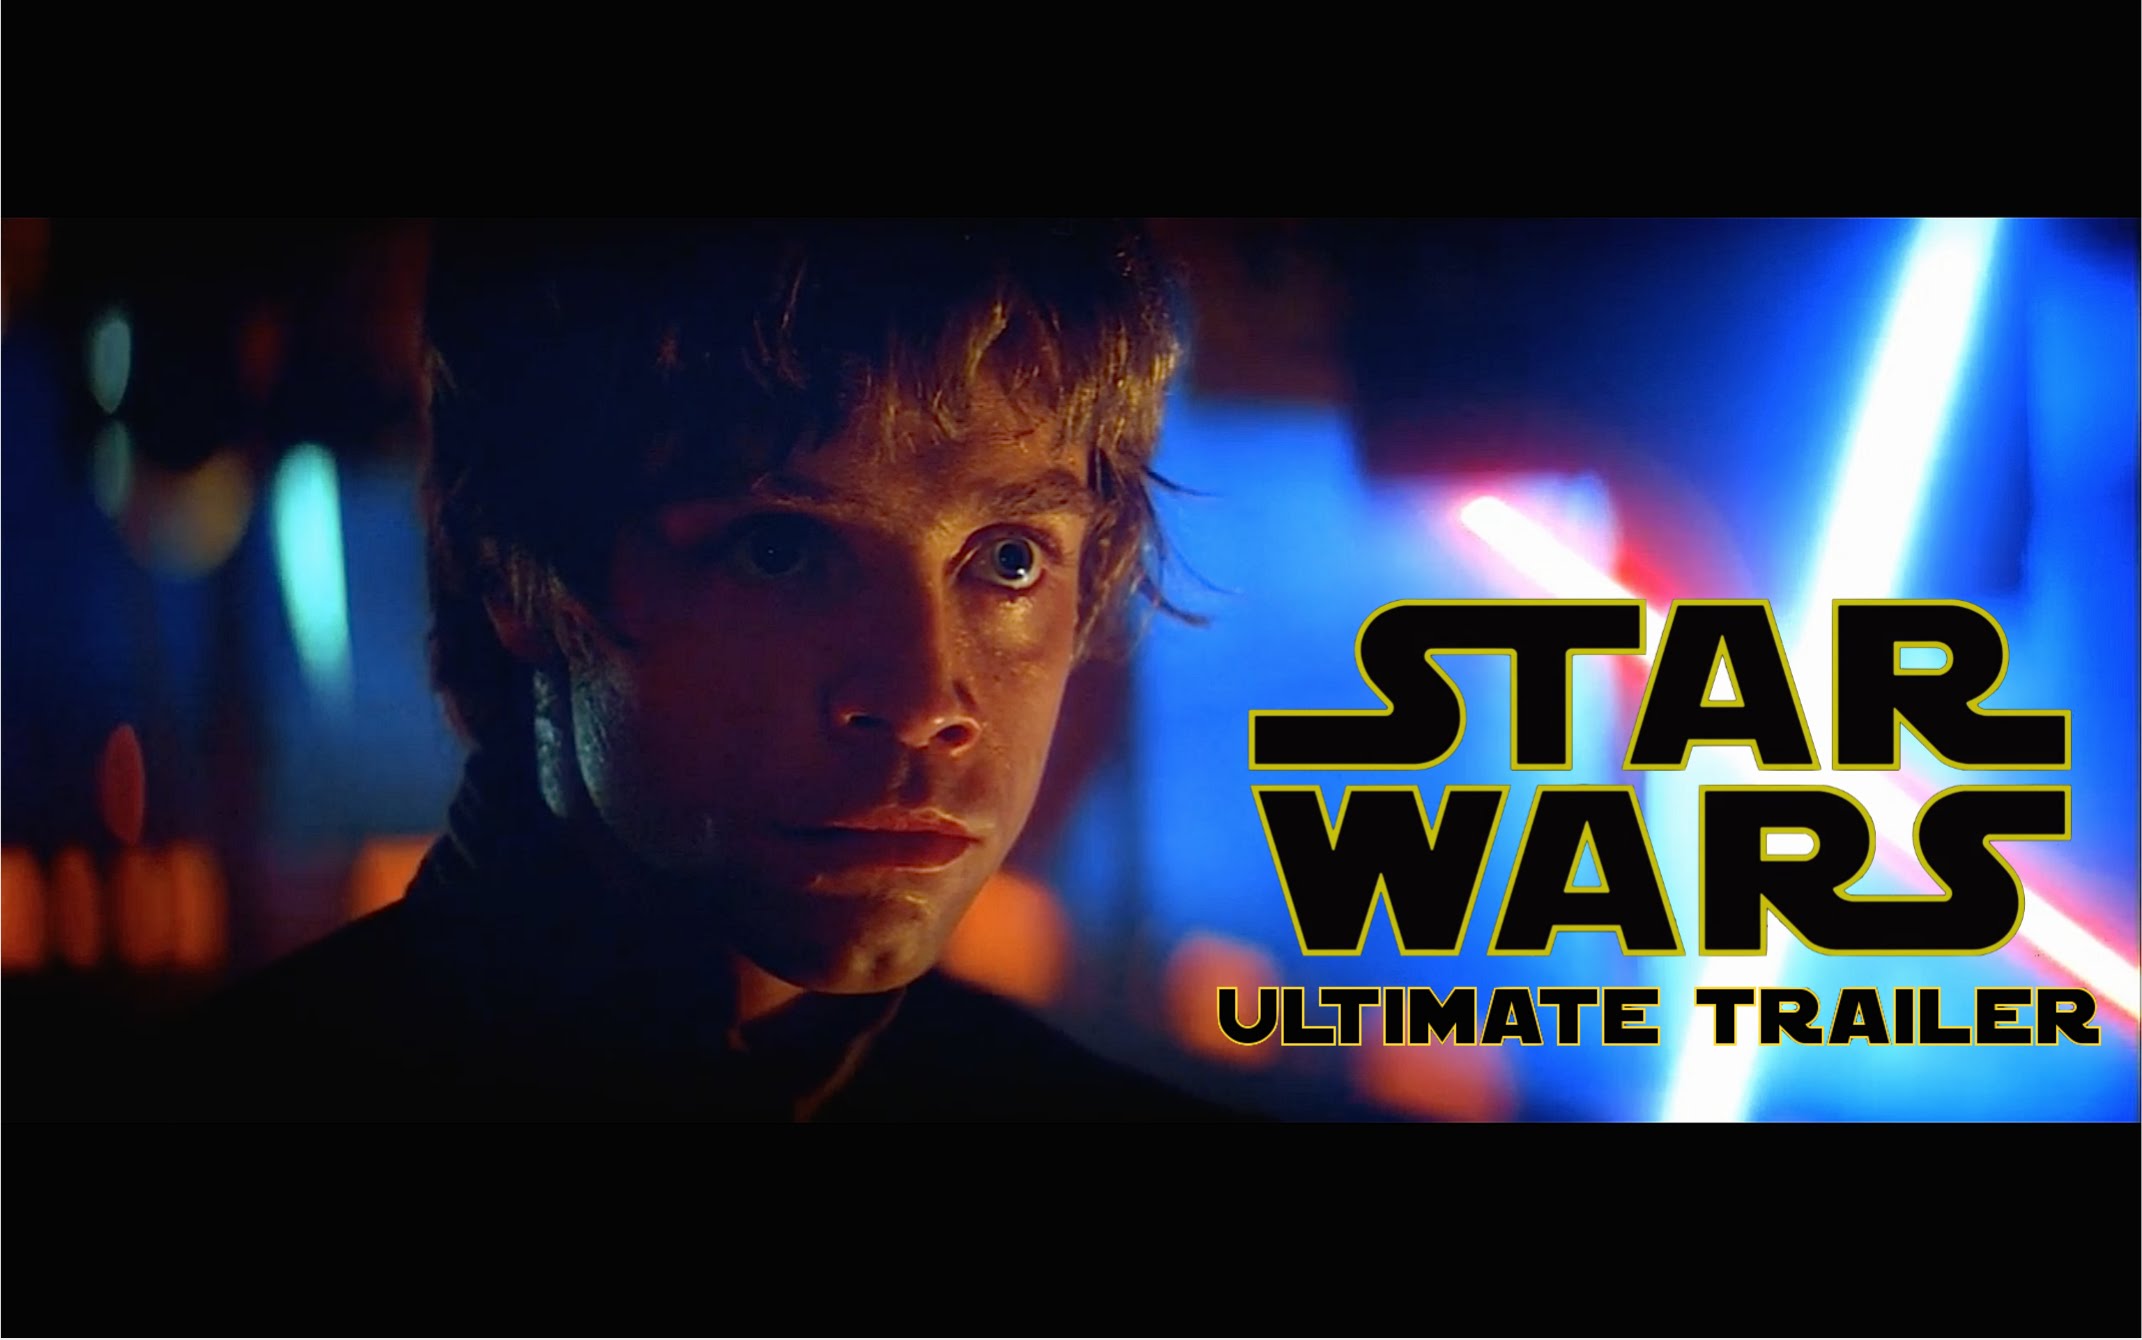 Star Wars: The Original Trilogy | Ultimate Trailer 1